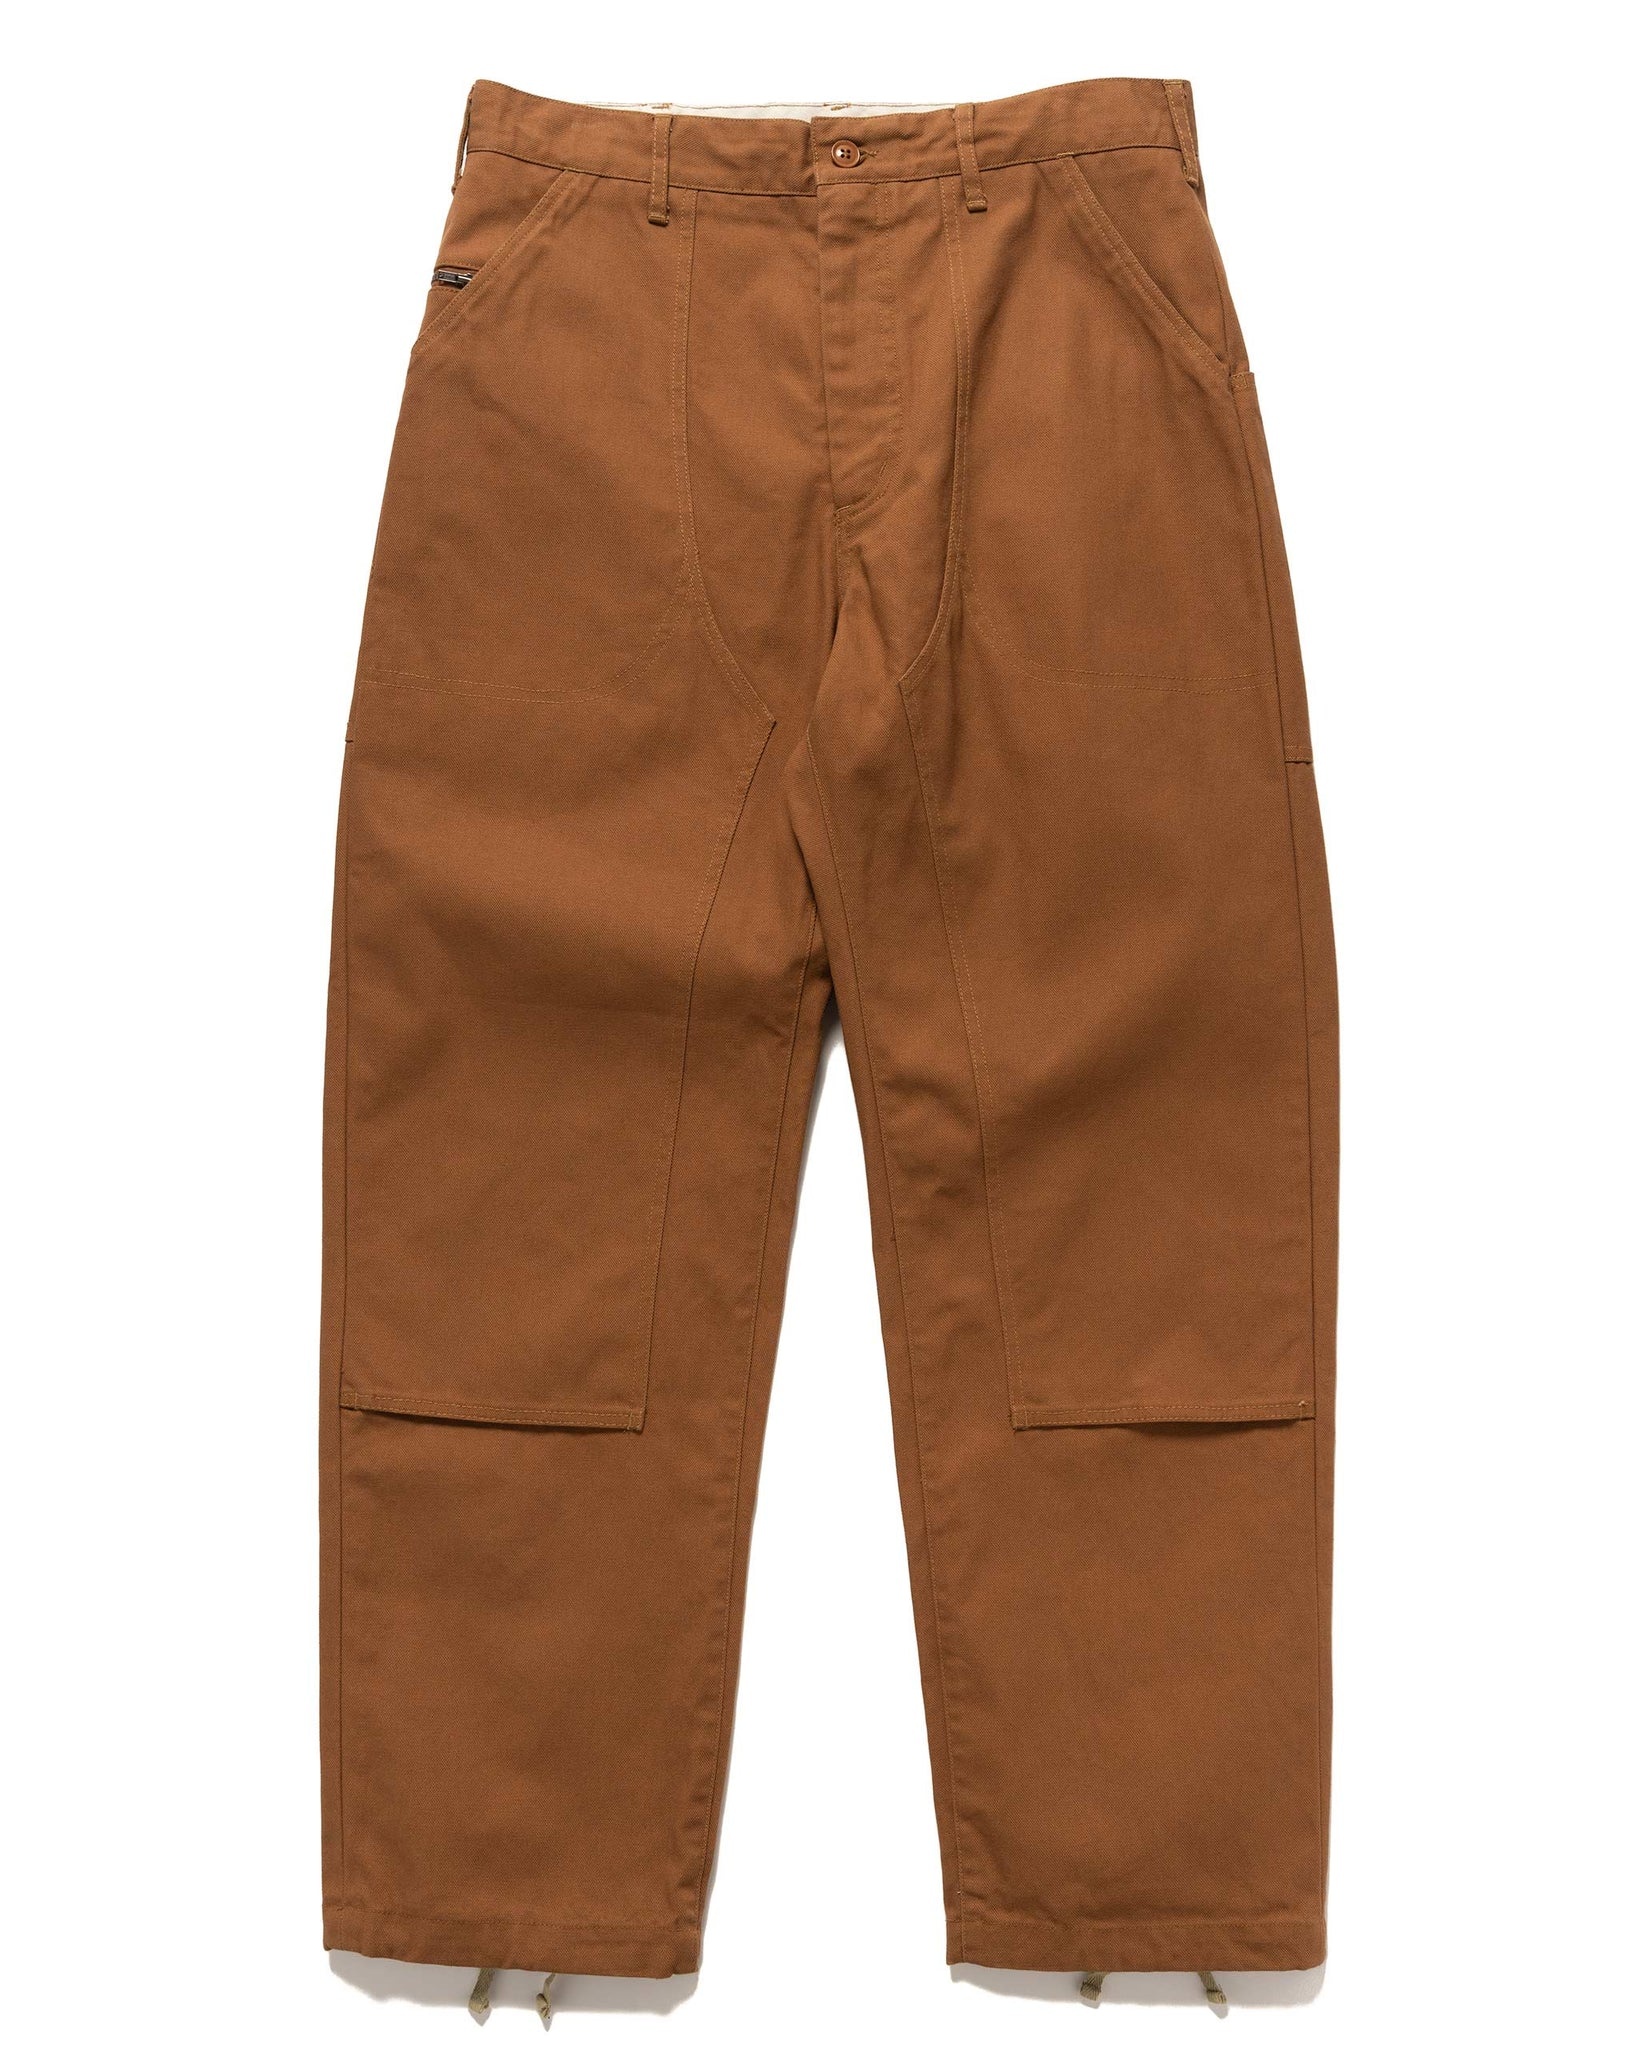 Engineered Garments Climbing Pant 12oz Duck Canvas Brown, havenshop